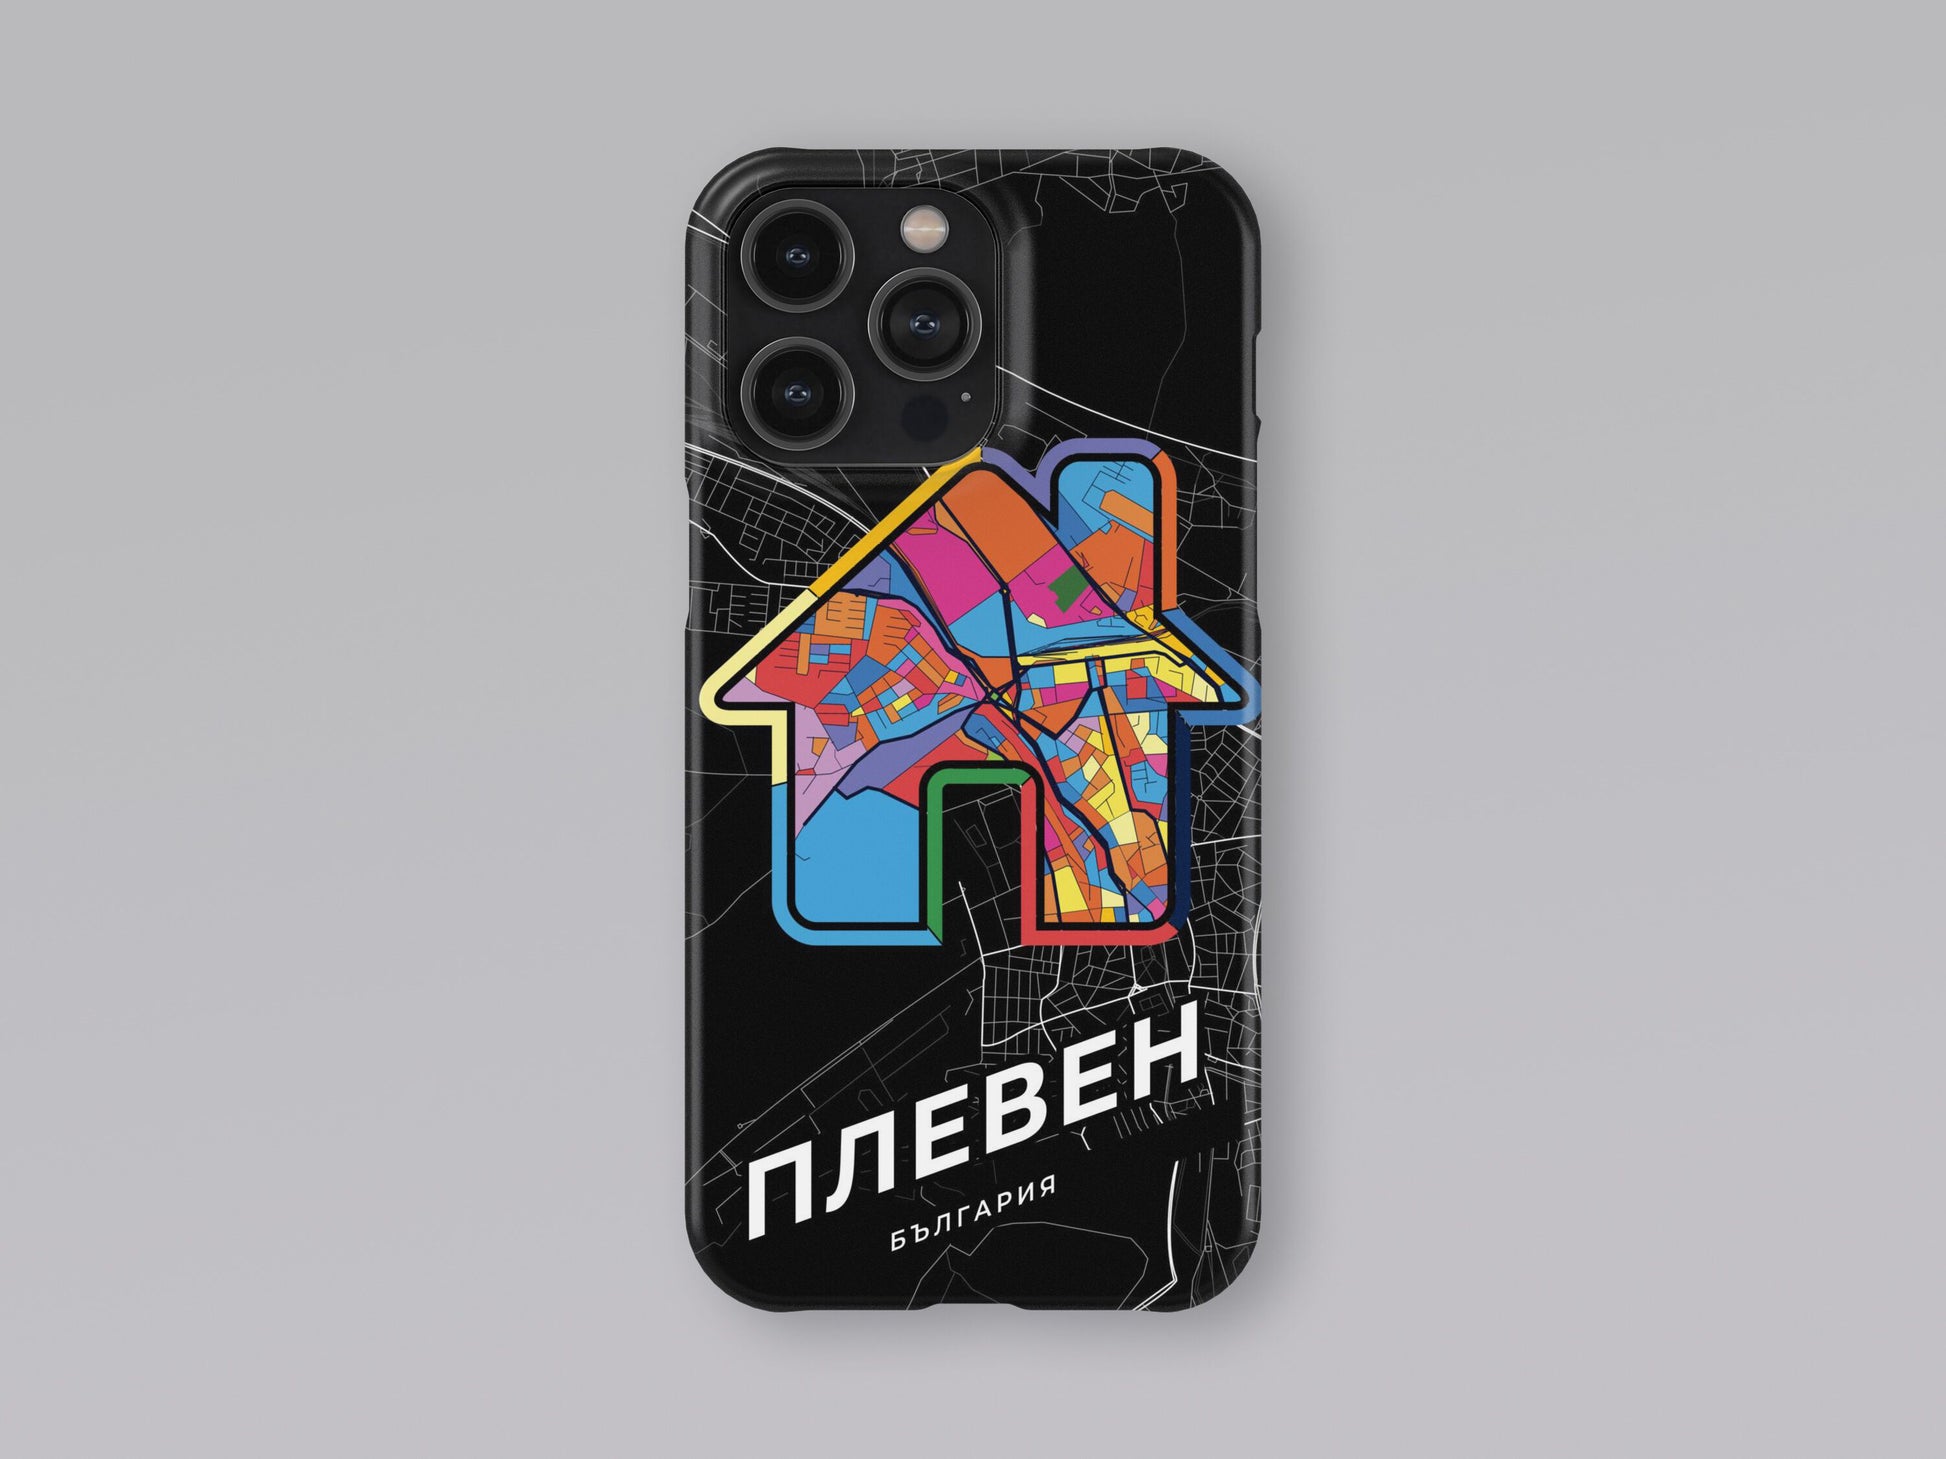 Плевен България slim phone case with colorful icon. Birthday, wedding or housewarming gift. Couple match cases. 3